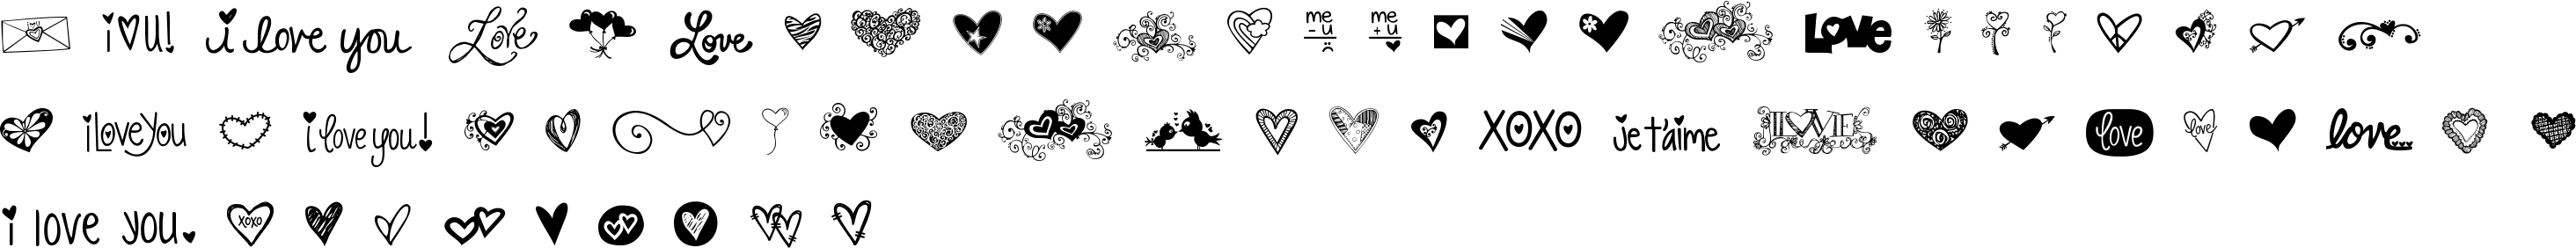 KG Heart Doodles Character Map